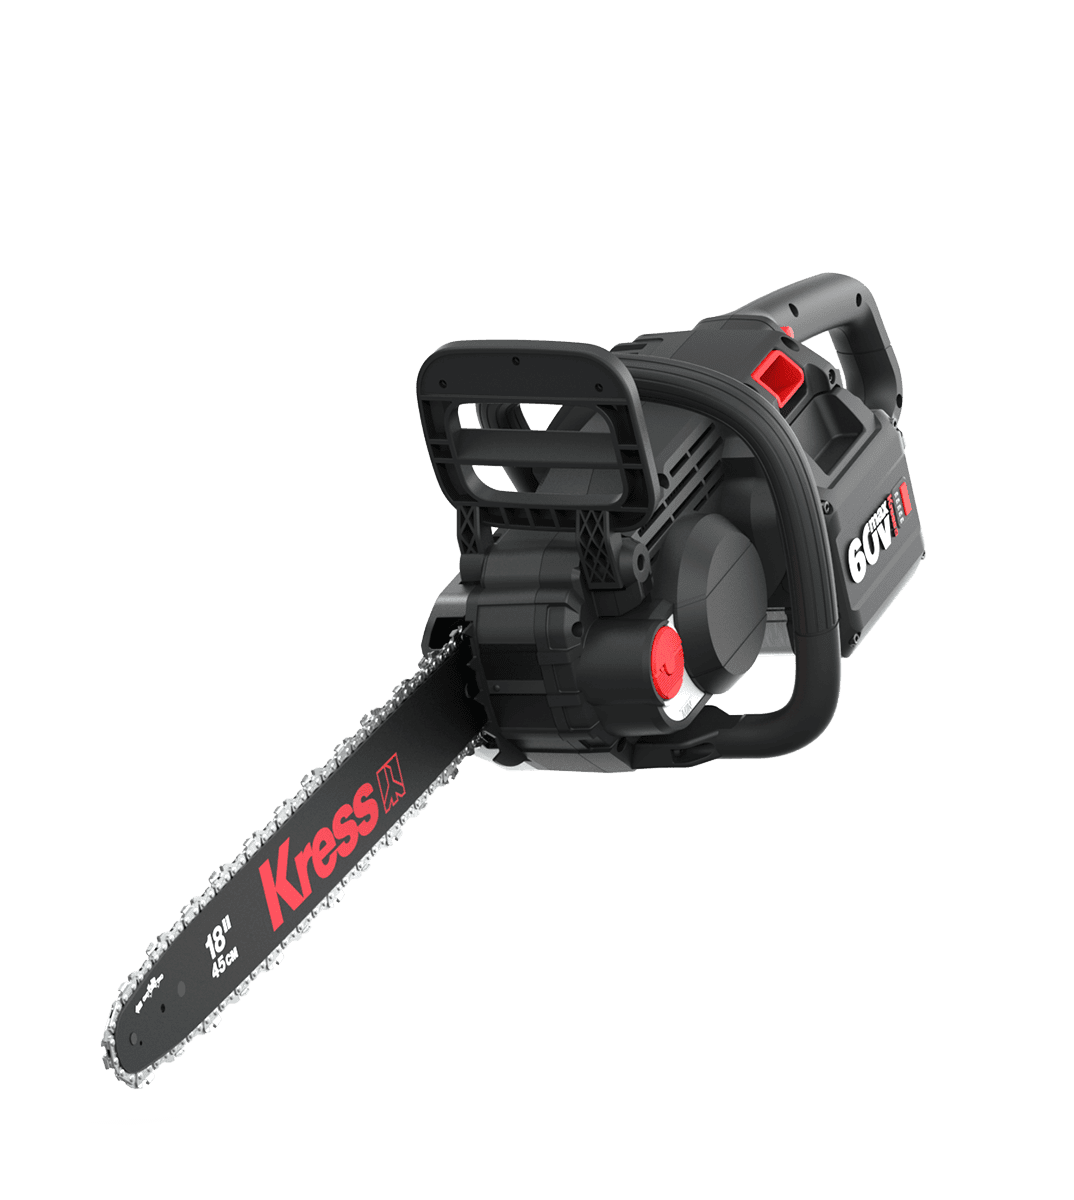 Kress Commercial  60 V 18'' brushless chainsaw — tool only